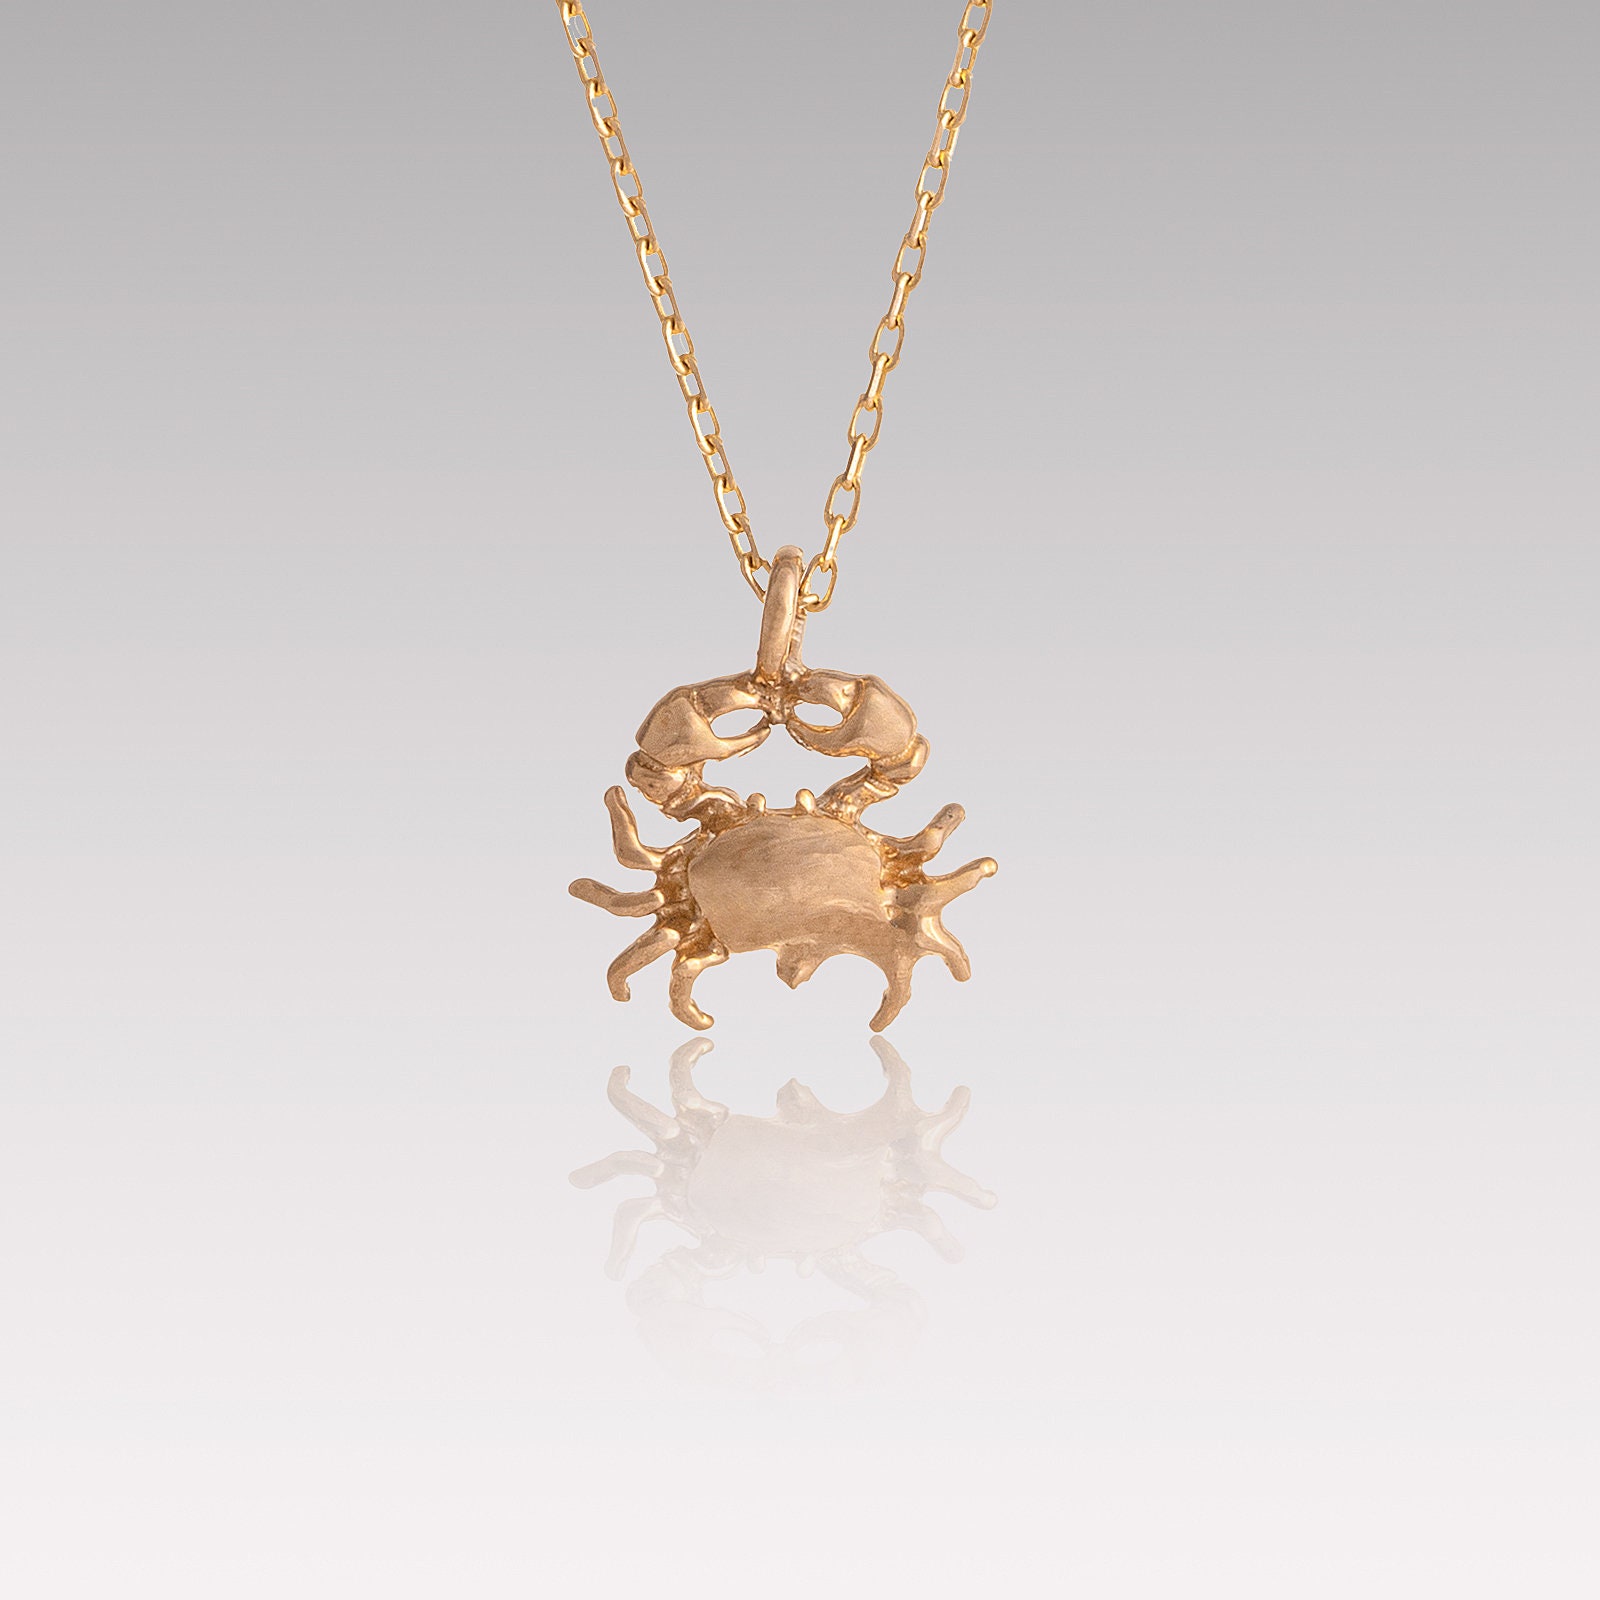 ♋ Cancer (Crab) Necklace – Mordekai